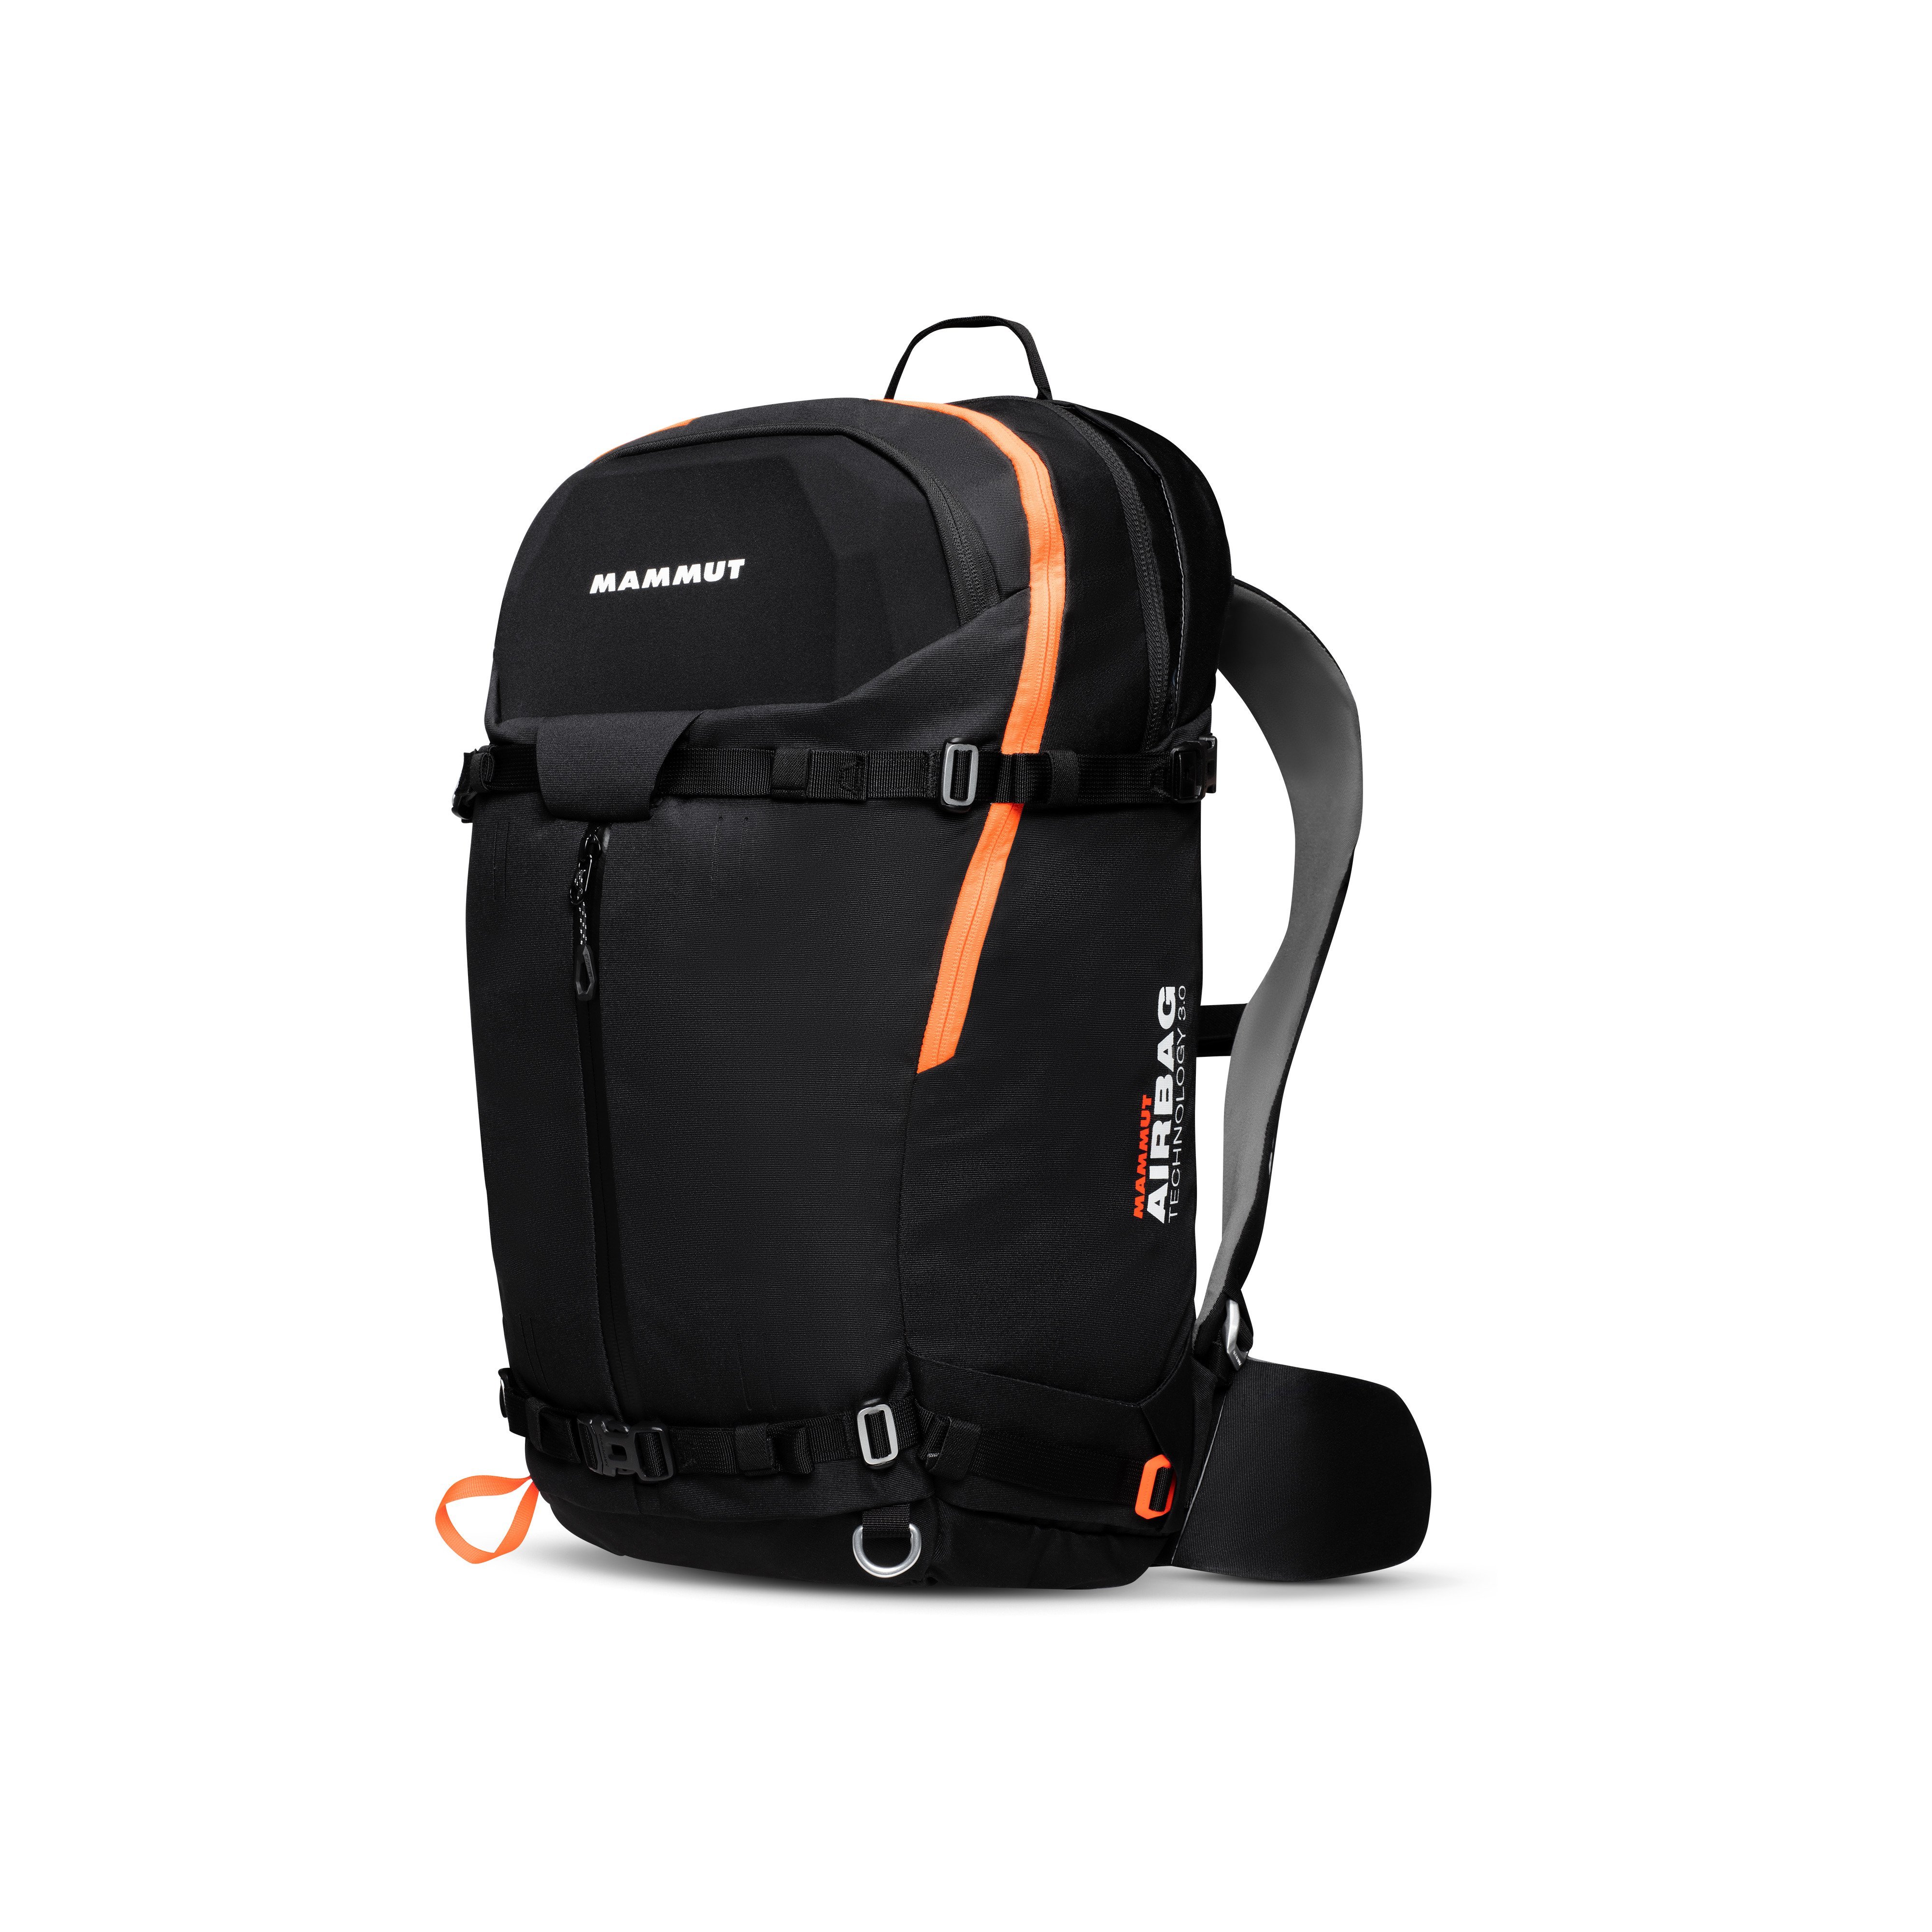 Pro X Removable Airbag 3.0 ready - black-vibrant orange, 35 L product image